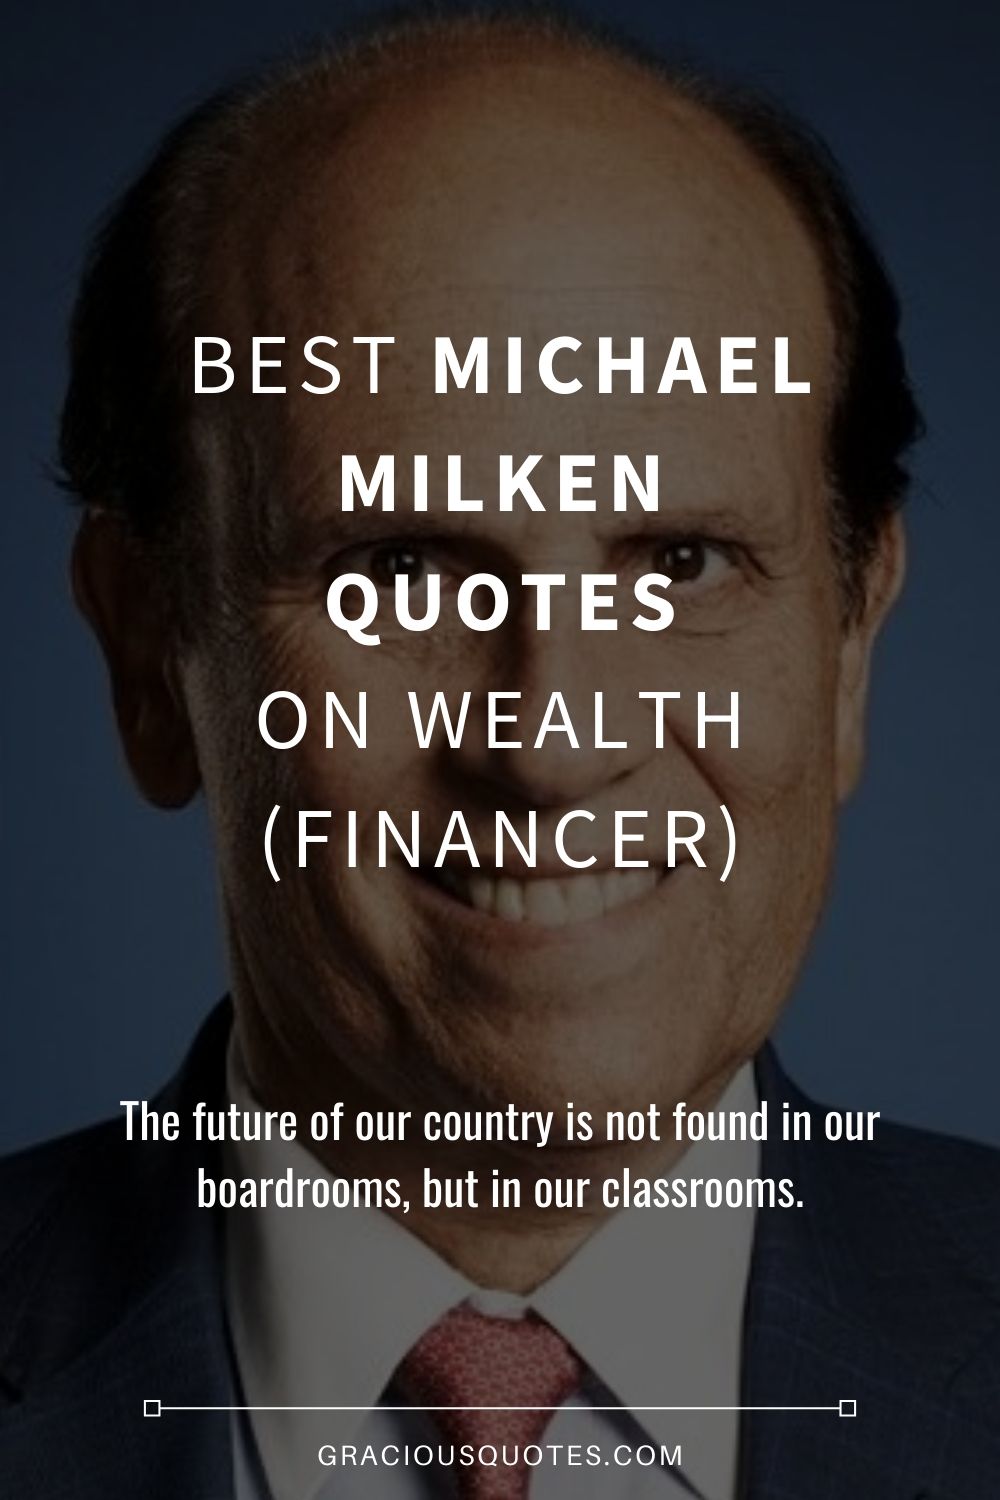 Best Michael Milken Quotes on Wealth (FINANCER) - Gracious Quotes